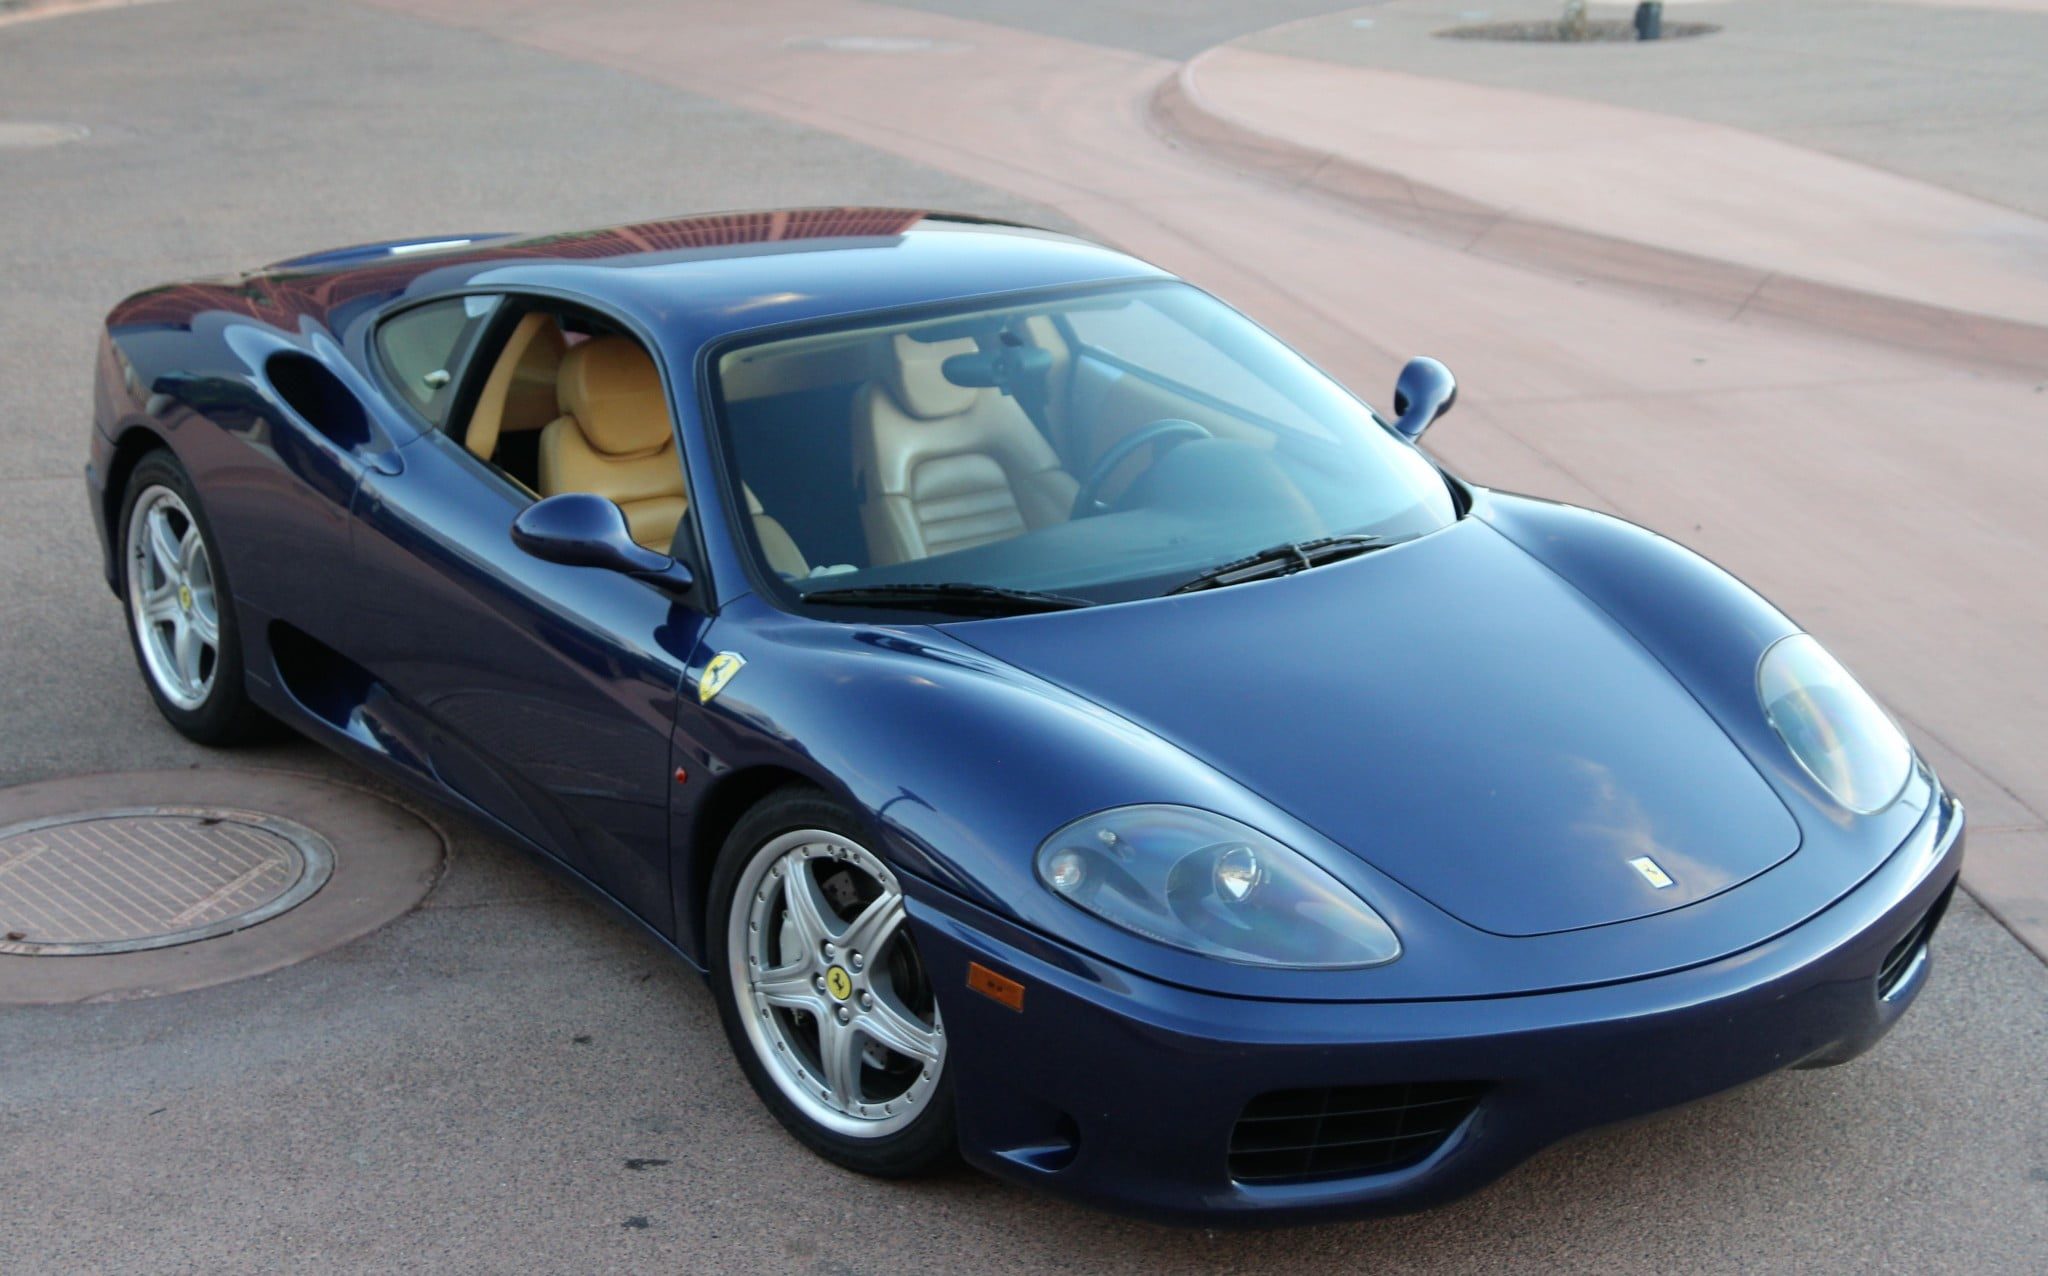 Ferrari: A Symphony of Speed and Elegance